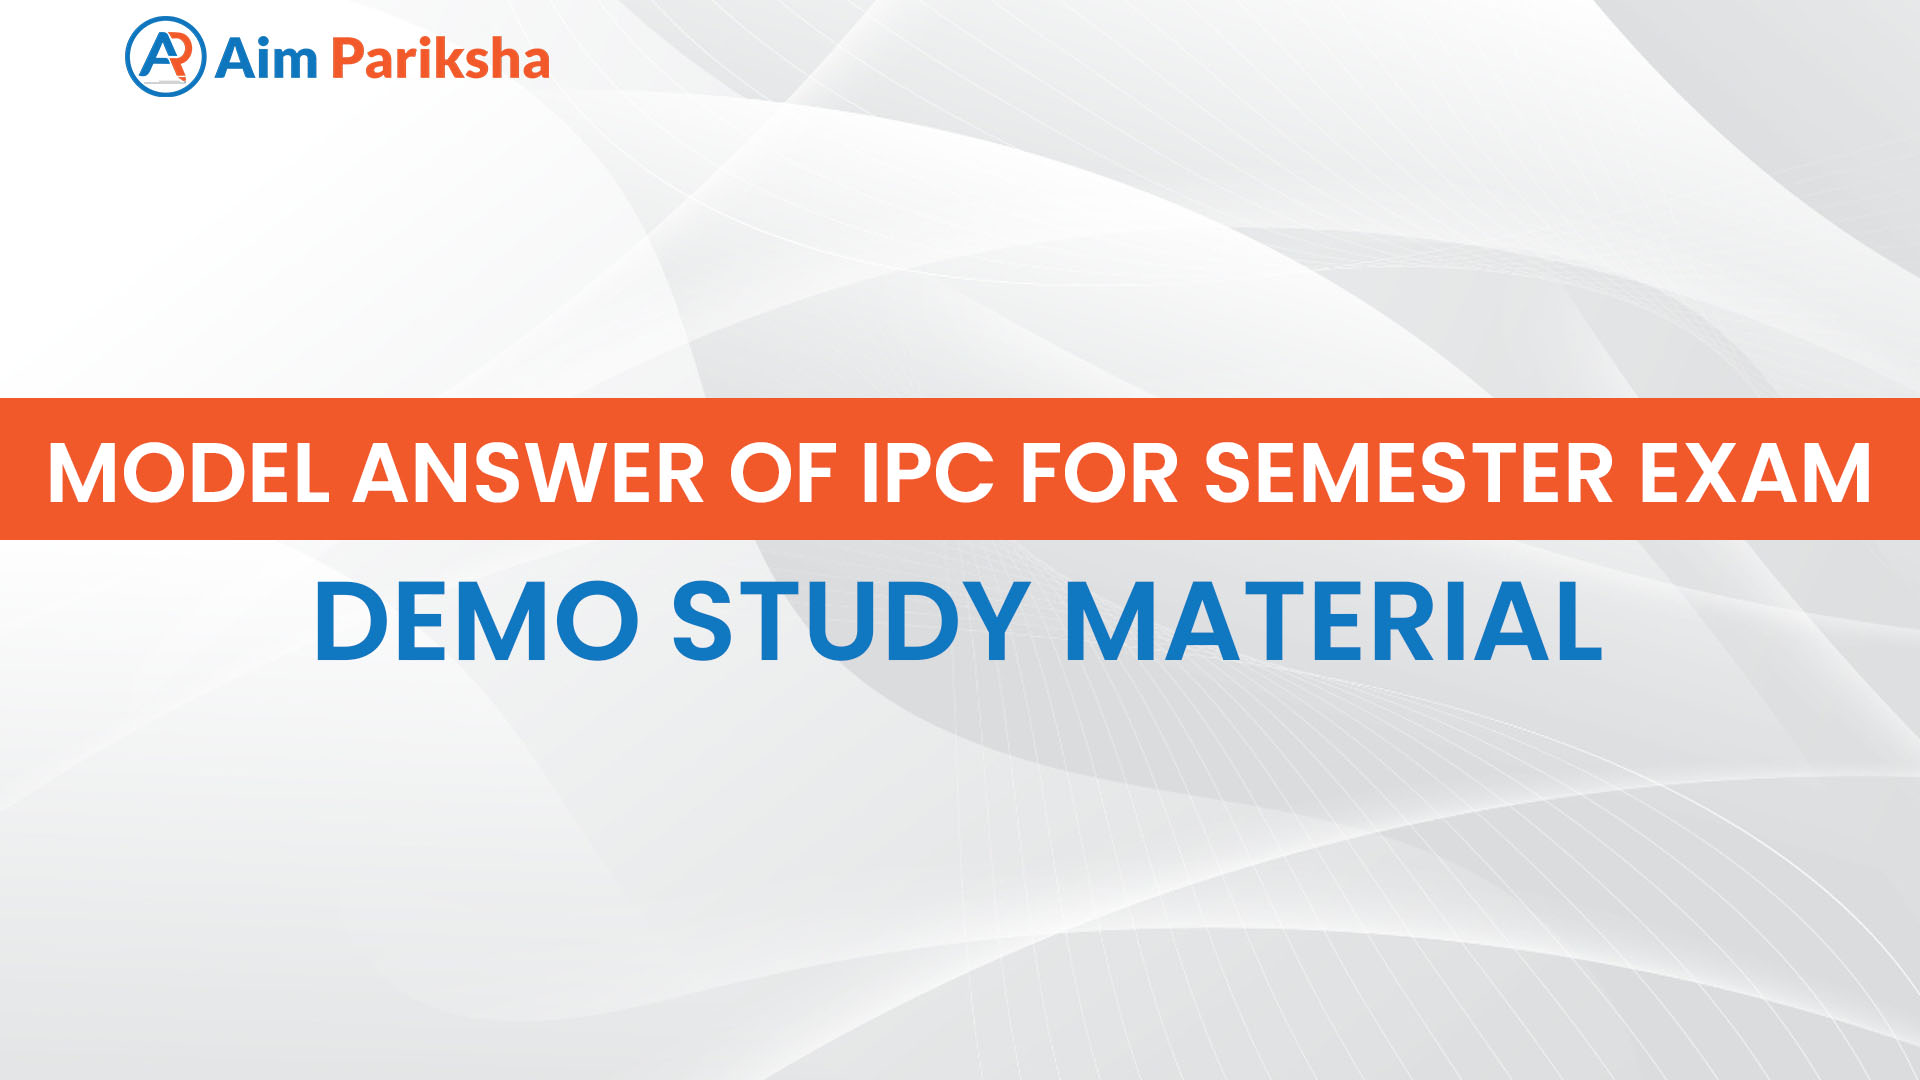 Model answer of IPC for Semester exam